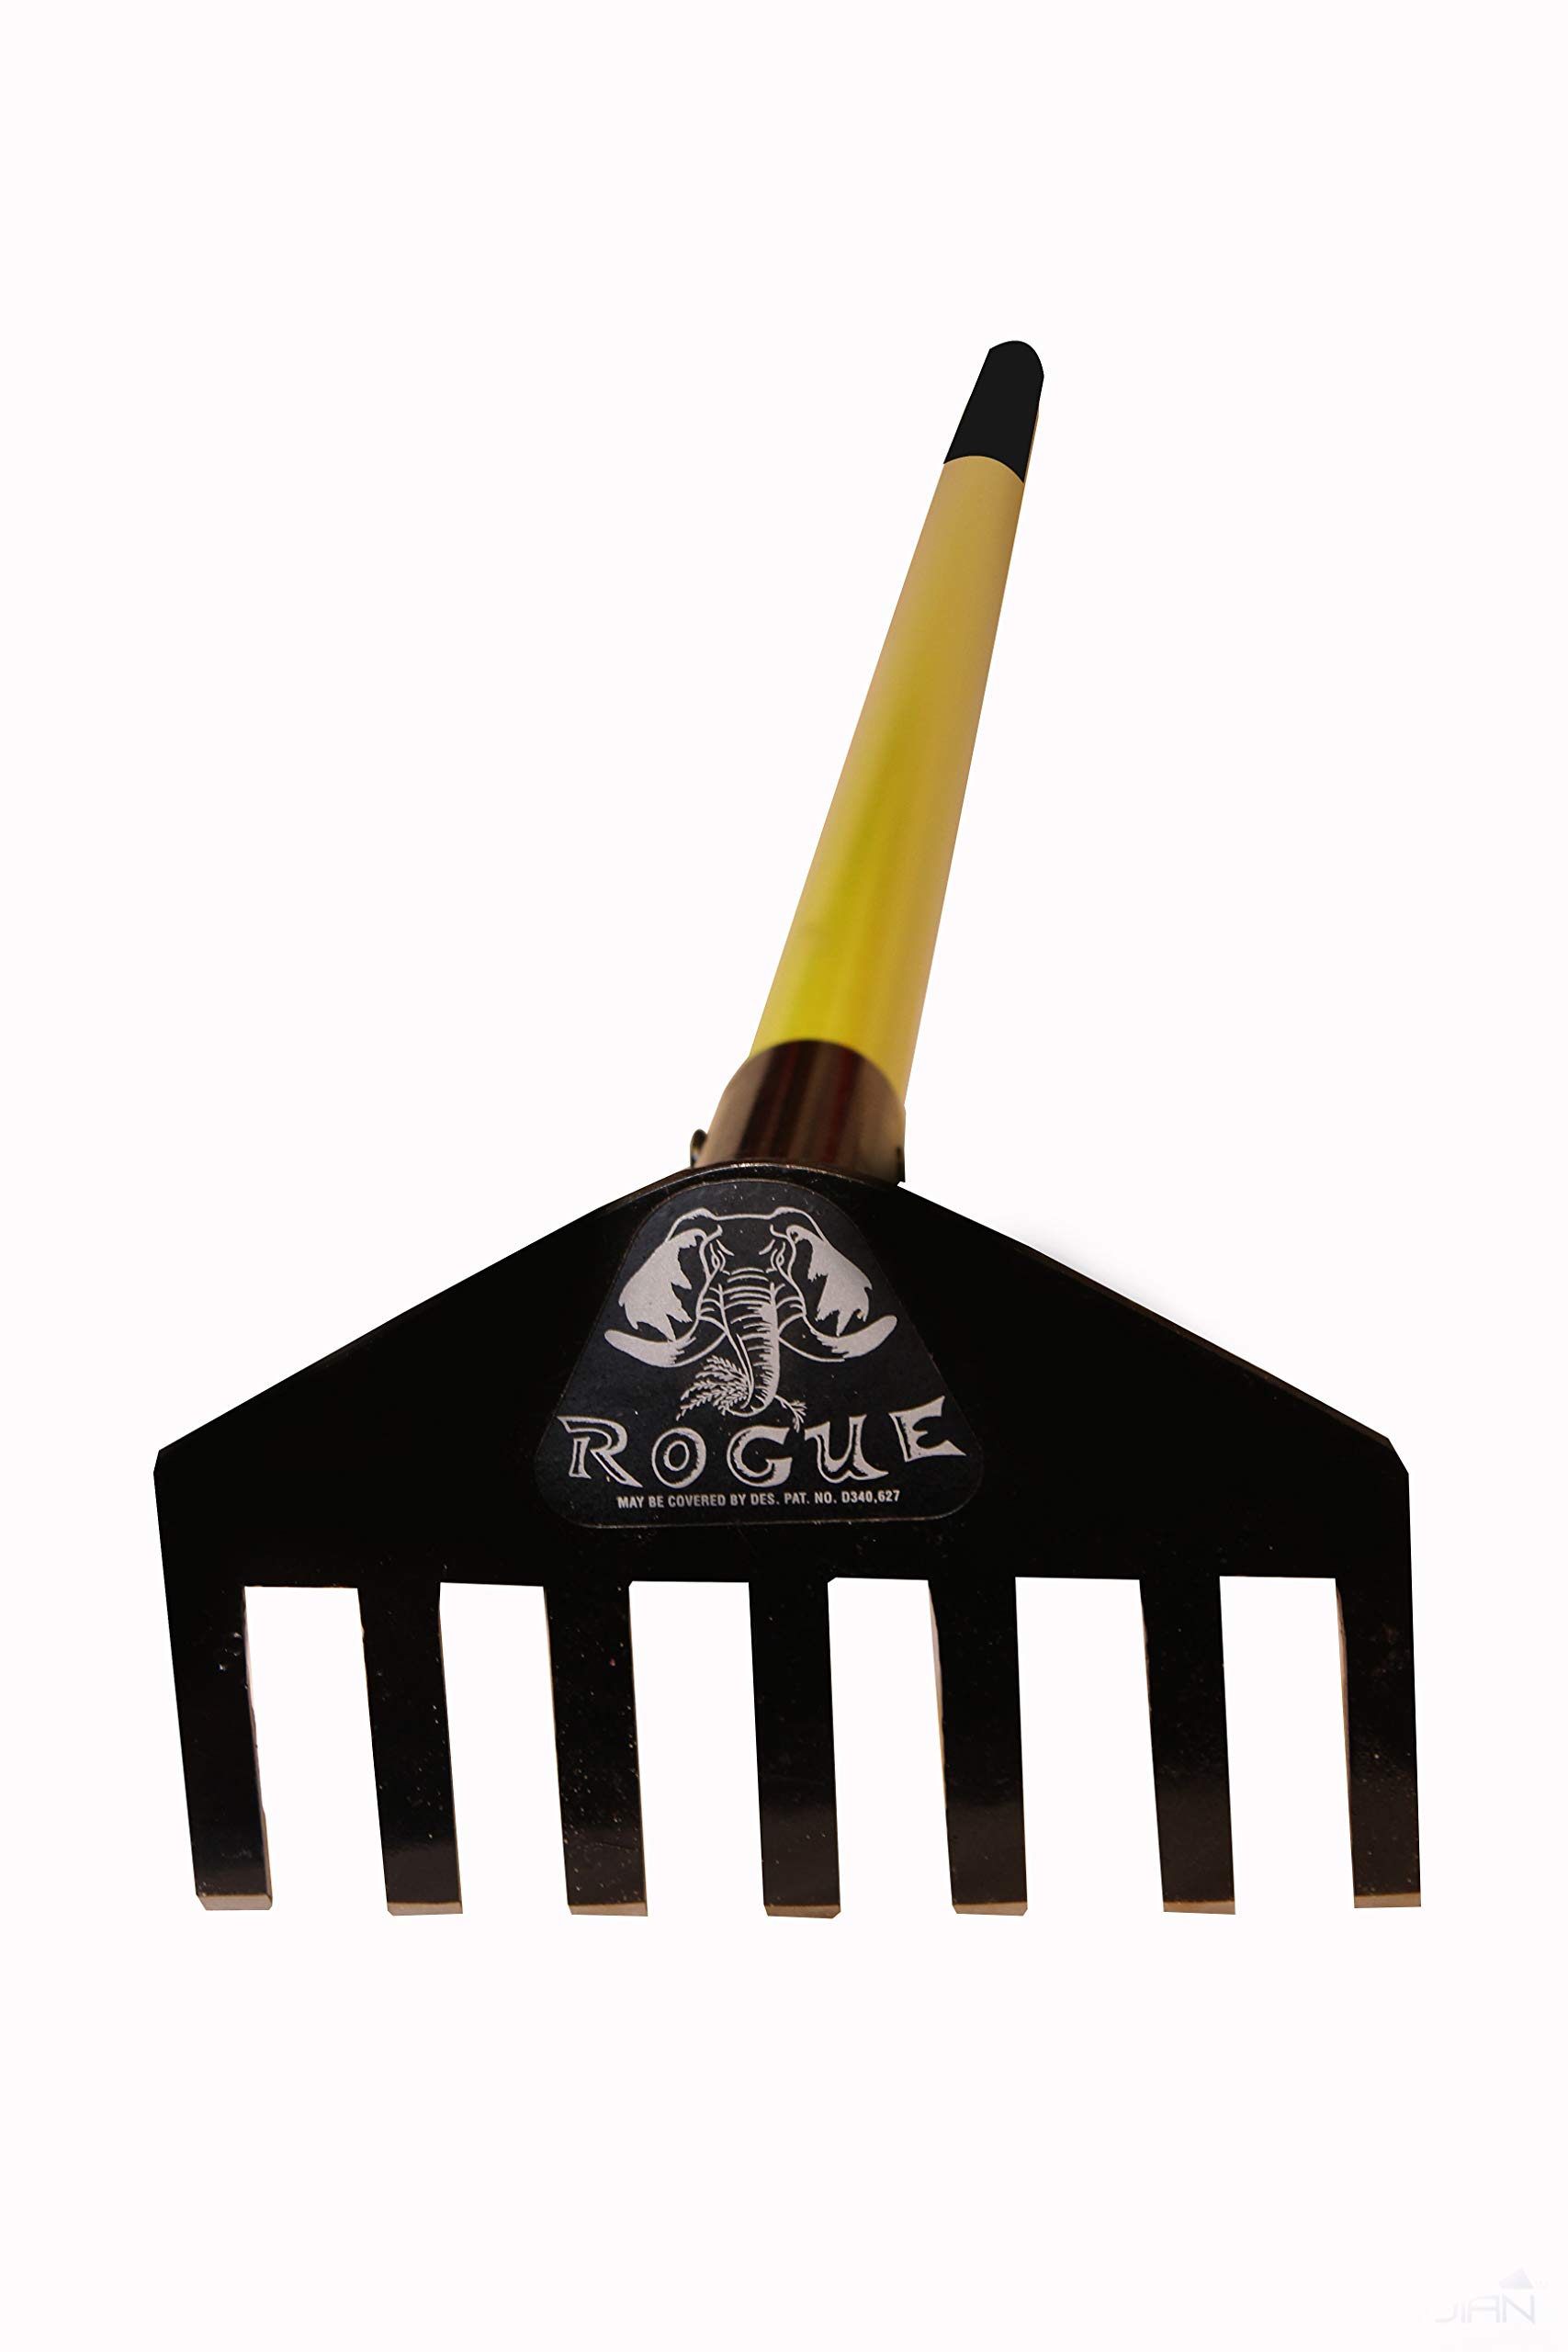 Rogue Garden Rake with 60 Inches Fiberglass Handle Heavy Duty 8 Inch Metal Rake Head Used for Digging Gardening Weeding an